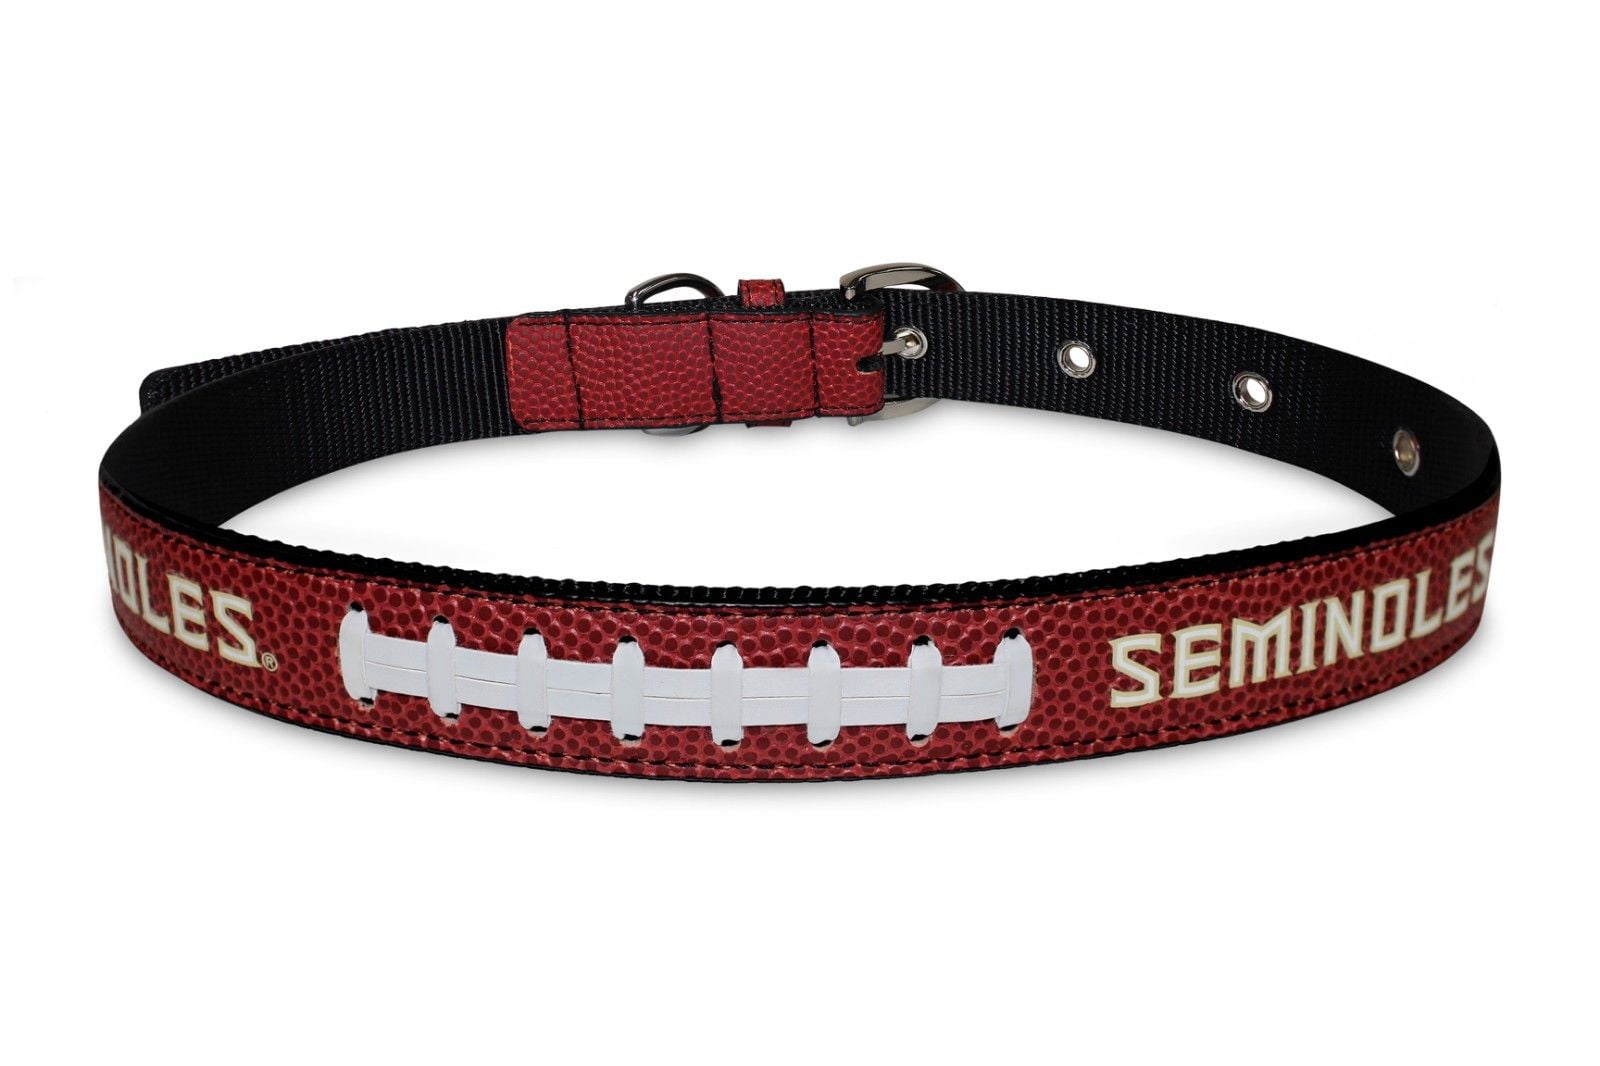 Florida State Seminoles Large Dog Collar